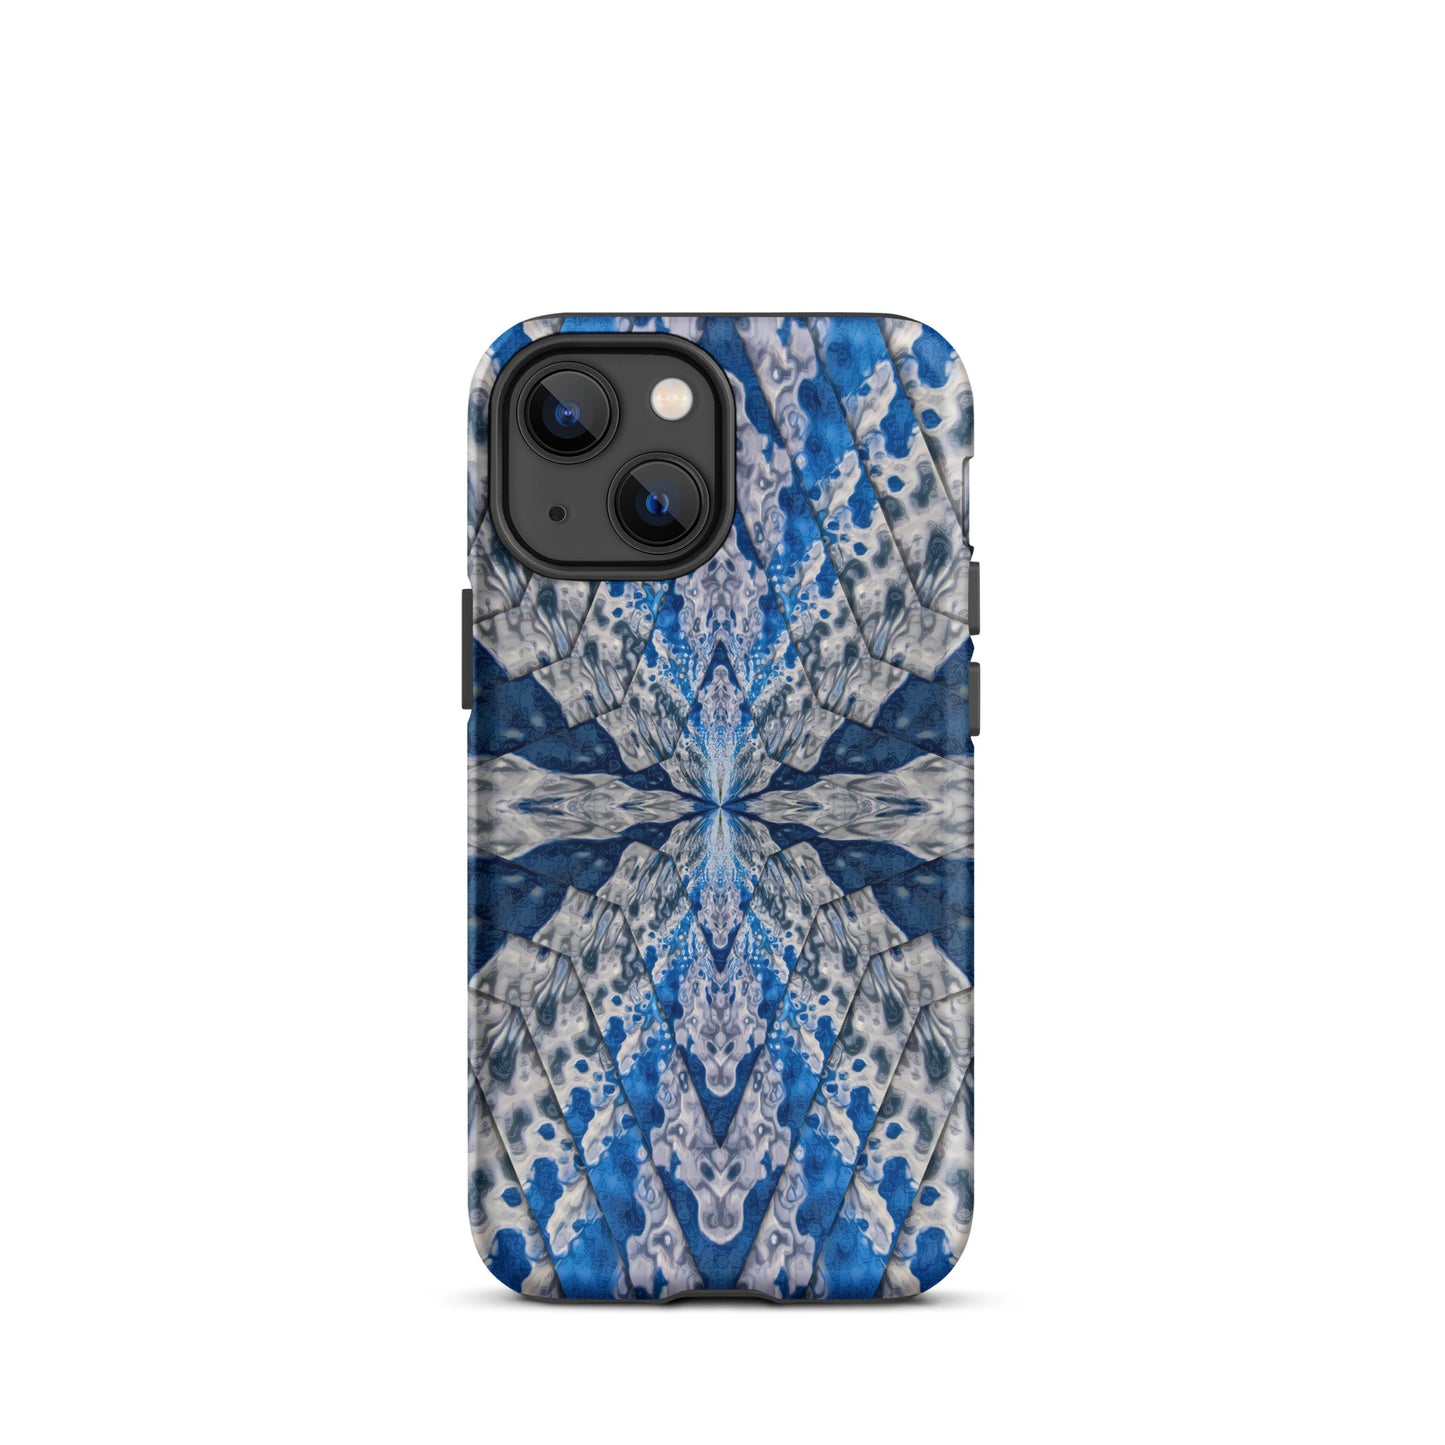 "Aqua Math" iCanvas Tough iPhone case